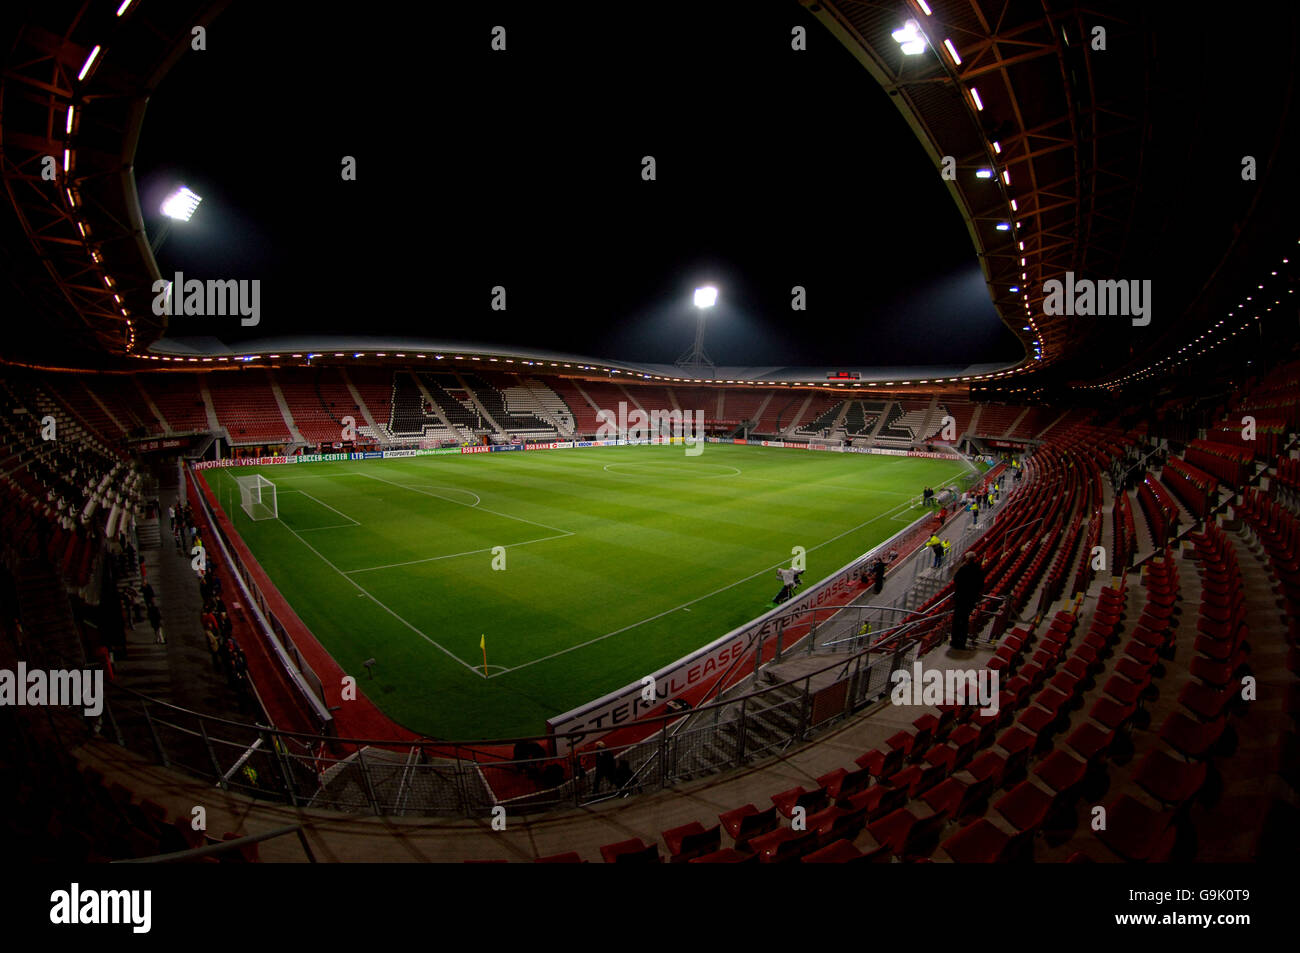 Soccer - UEFA Cup - Group C - AZ Alkmaar v Braga - DSB Stadium. DSB Stadium, home of AZ Alkmaar Stock Photo